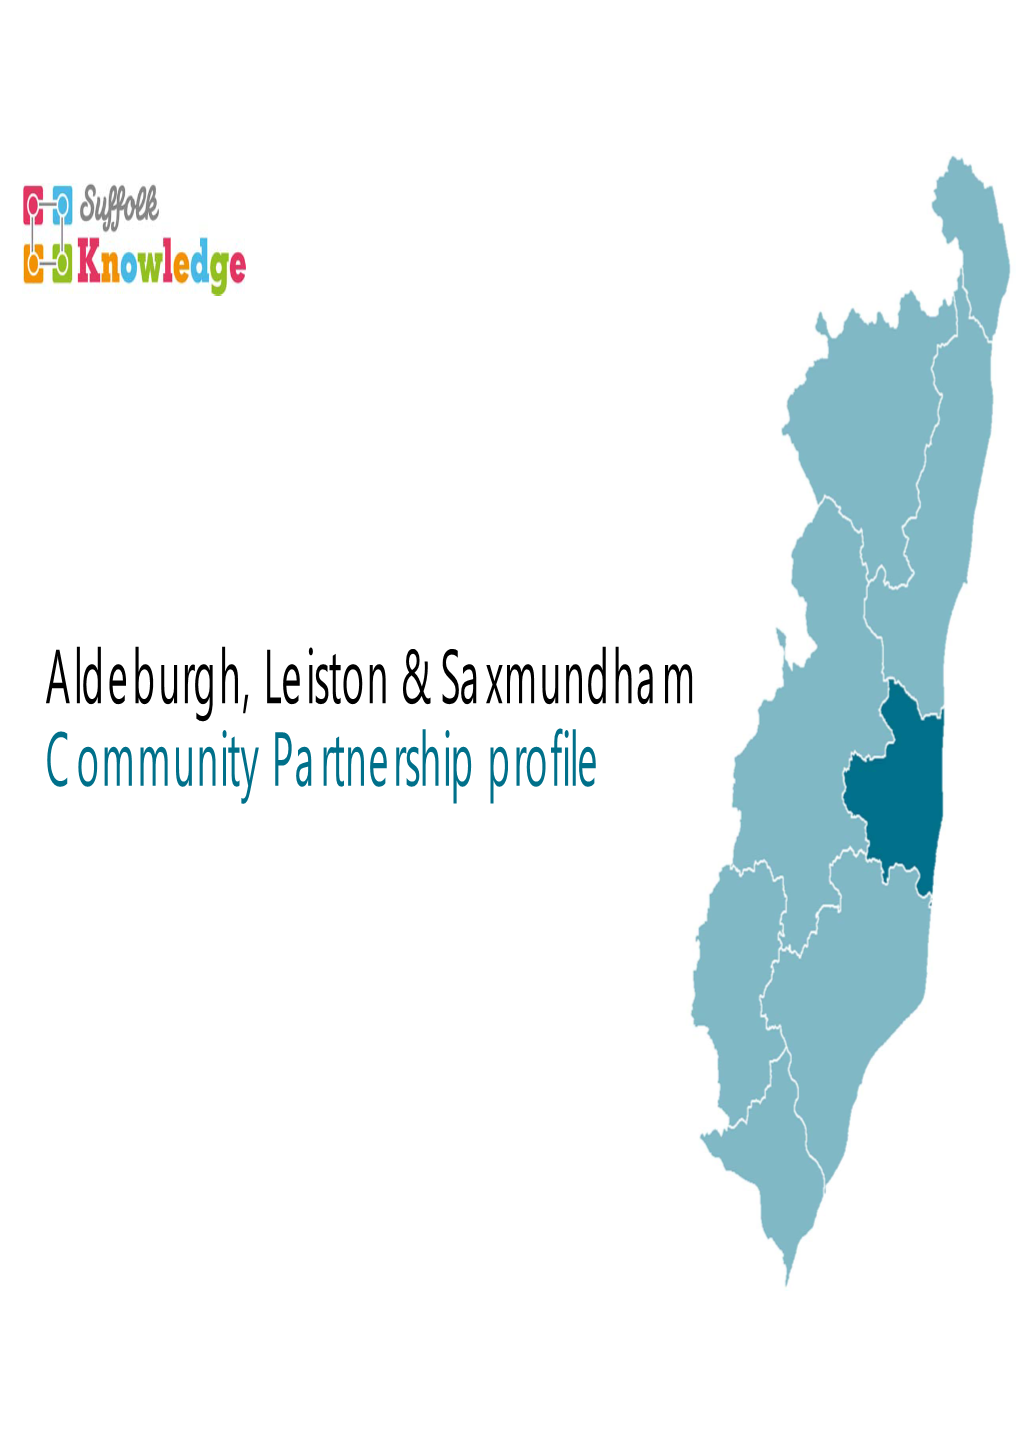 Aldeburgh, Leiston & Saxmundham Community Partnership Profile